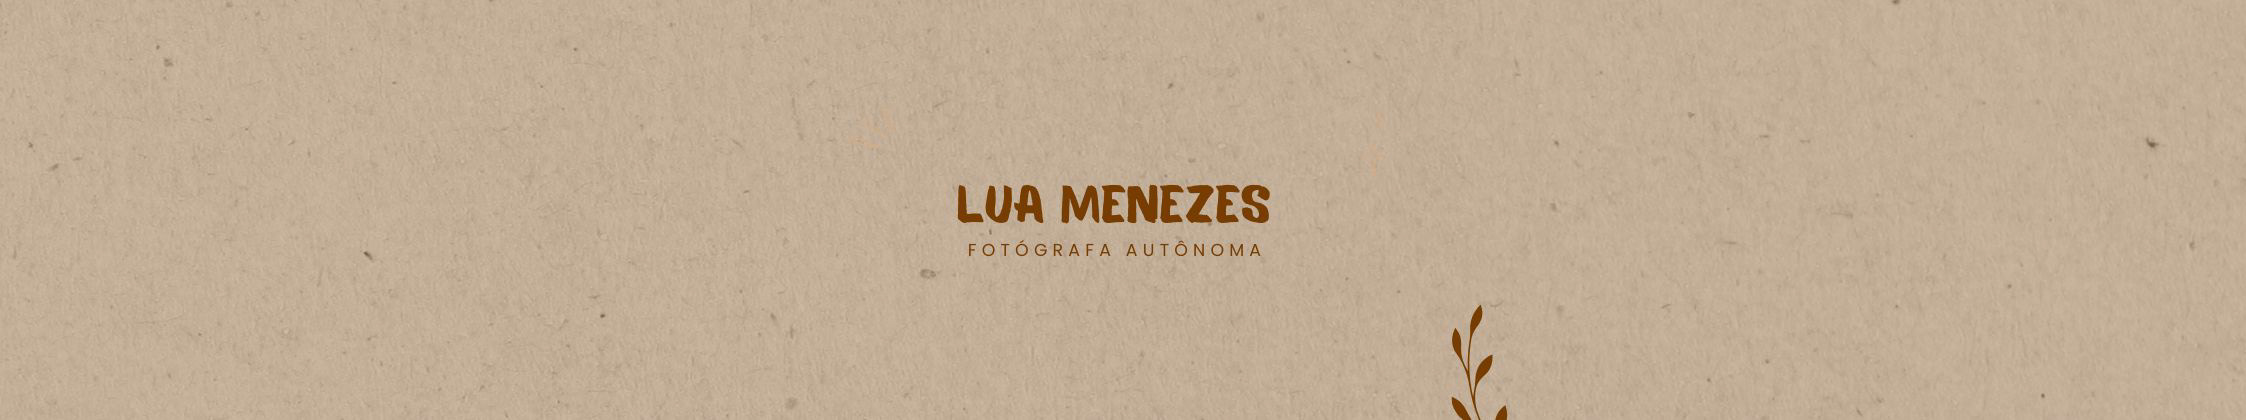 Lua Menezes's profile banner